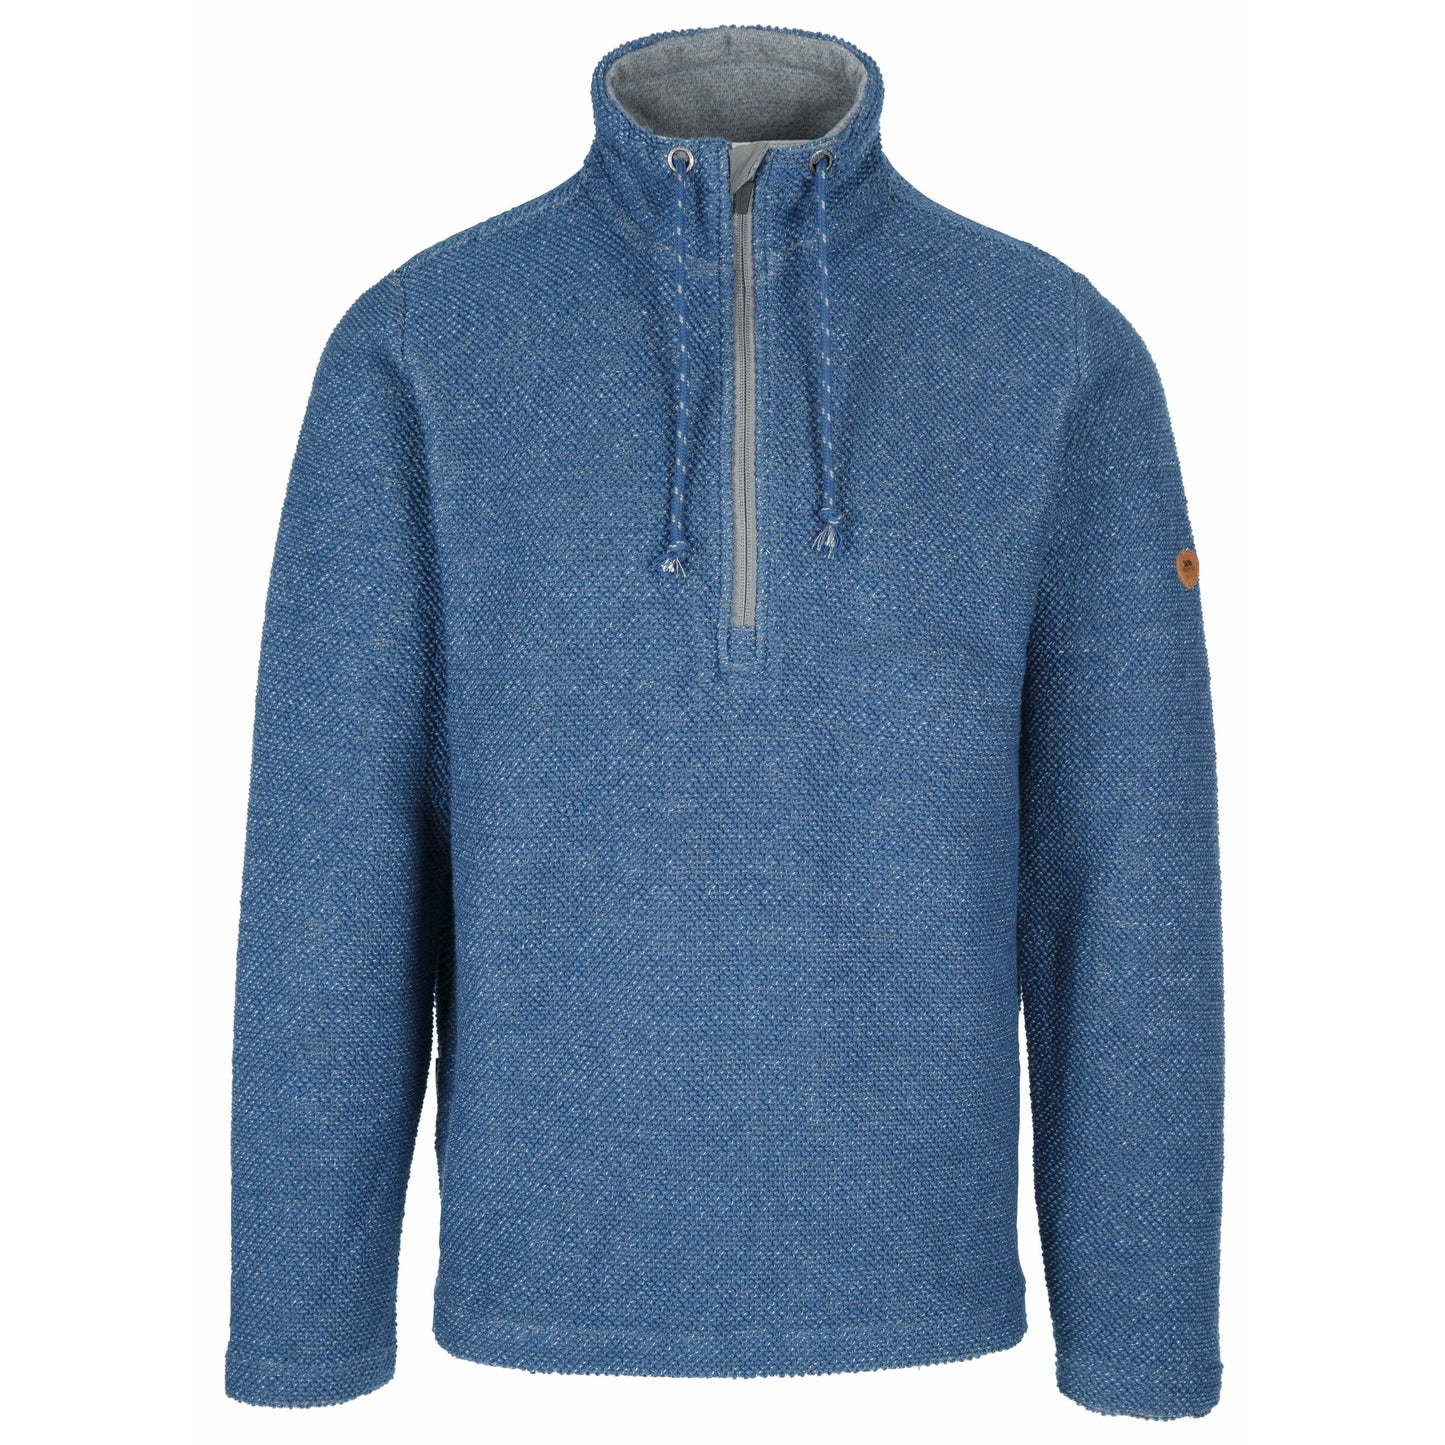 Falmouthfloss Men's Sweater in Smokey Blue